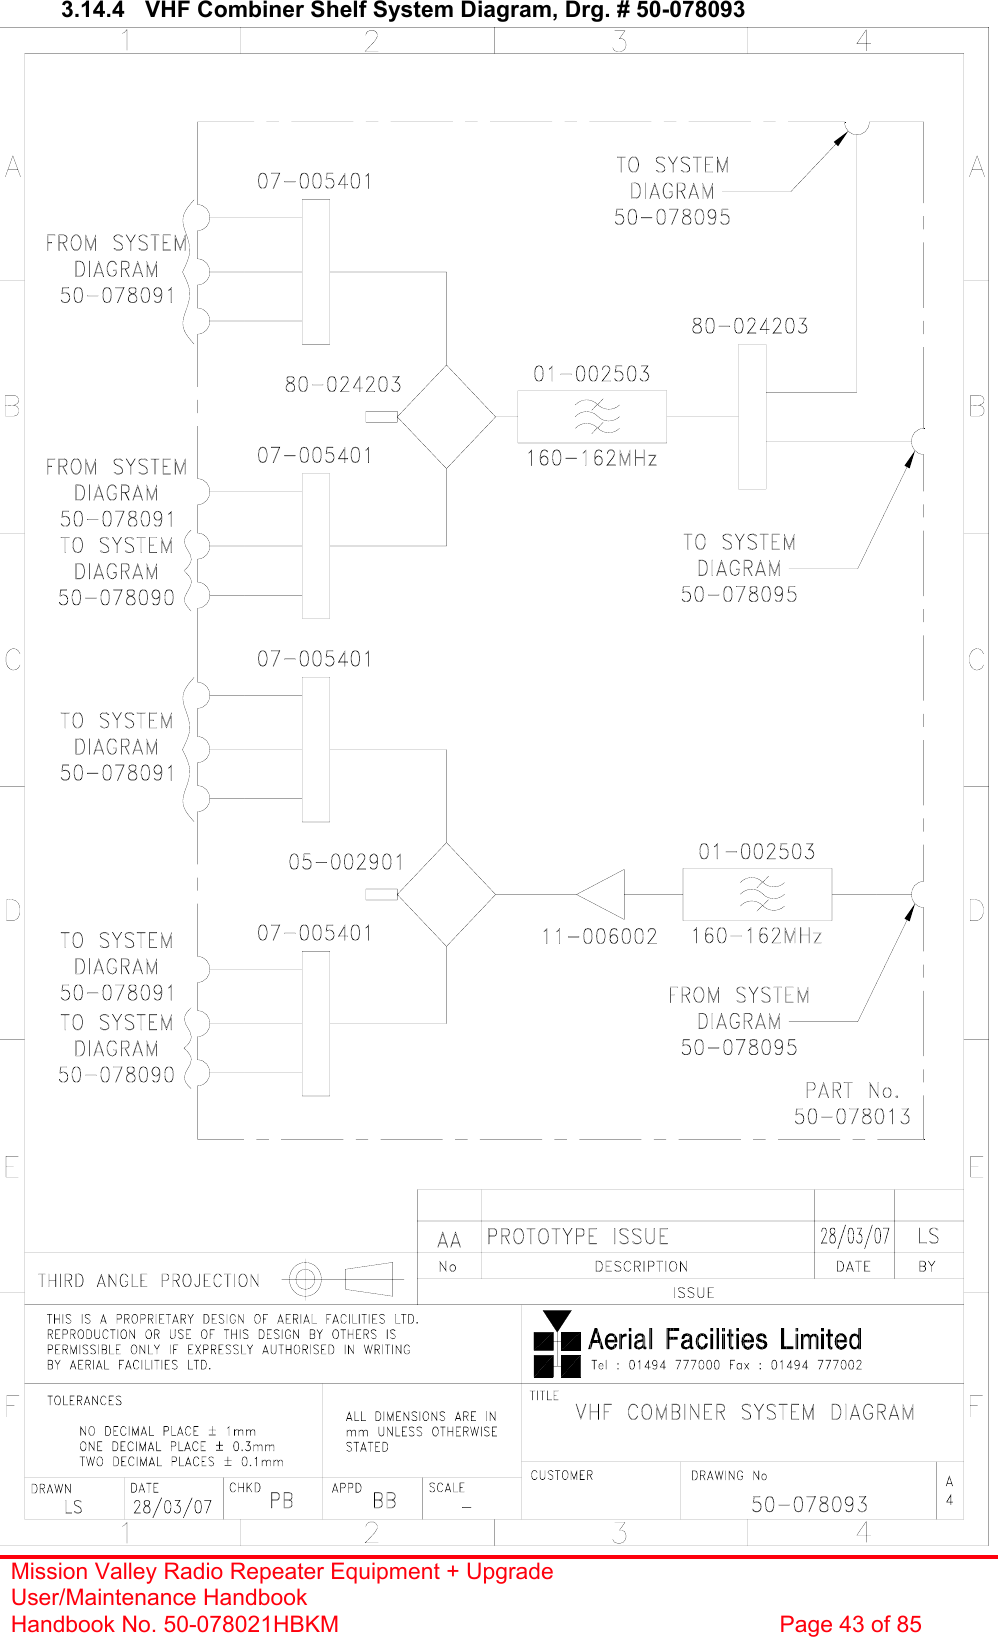 Mission Valley Radio Repeater Equipment + Upgrade User/Maintenance Handbook Handbook No. 50-078021HBKM  Page 43 of 85   3.14.4  VHF Combiner Shelf System Diagram, Drg. # 50-078093  